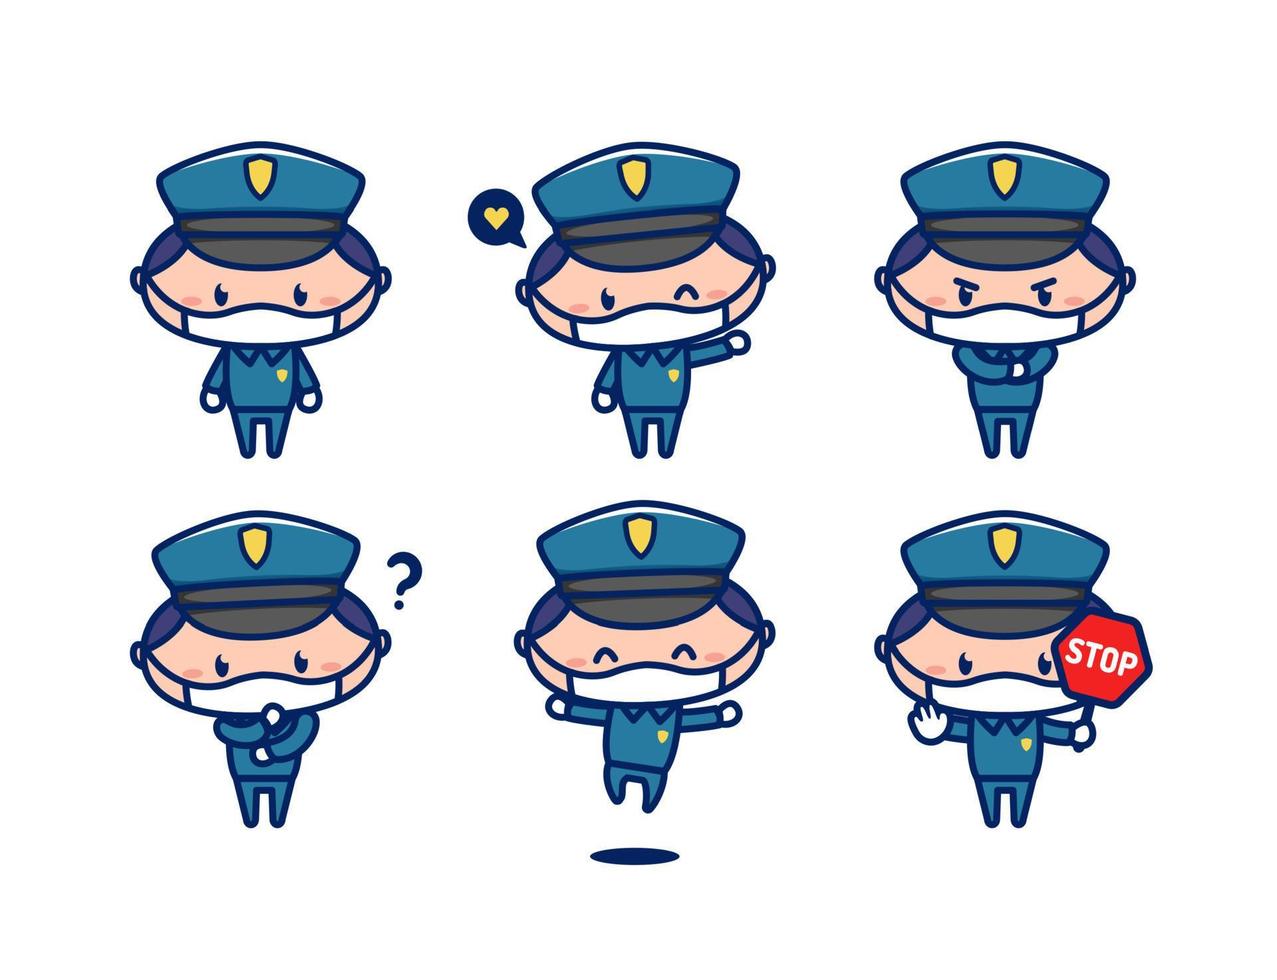 personagem de mascote de policial bonito no estilo chibi usar máscara facial vetor